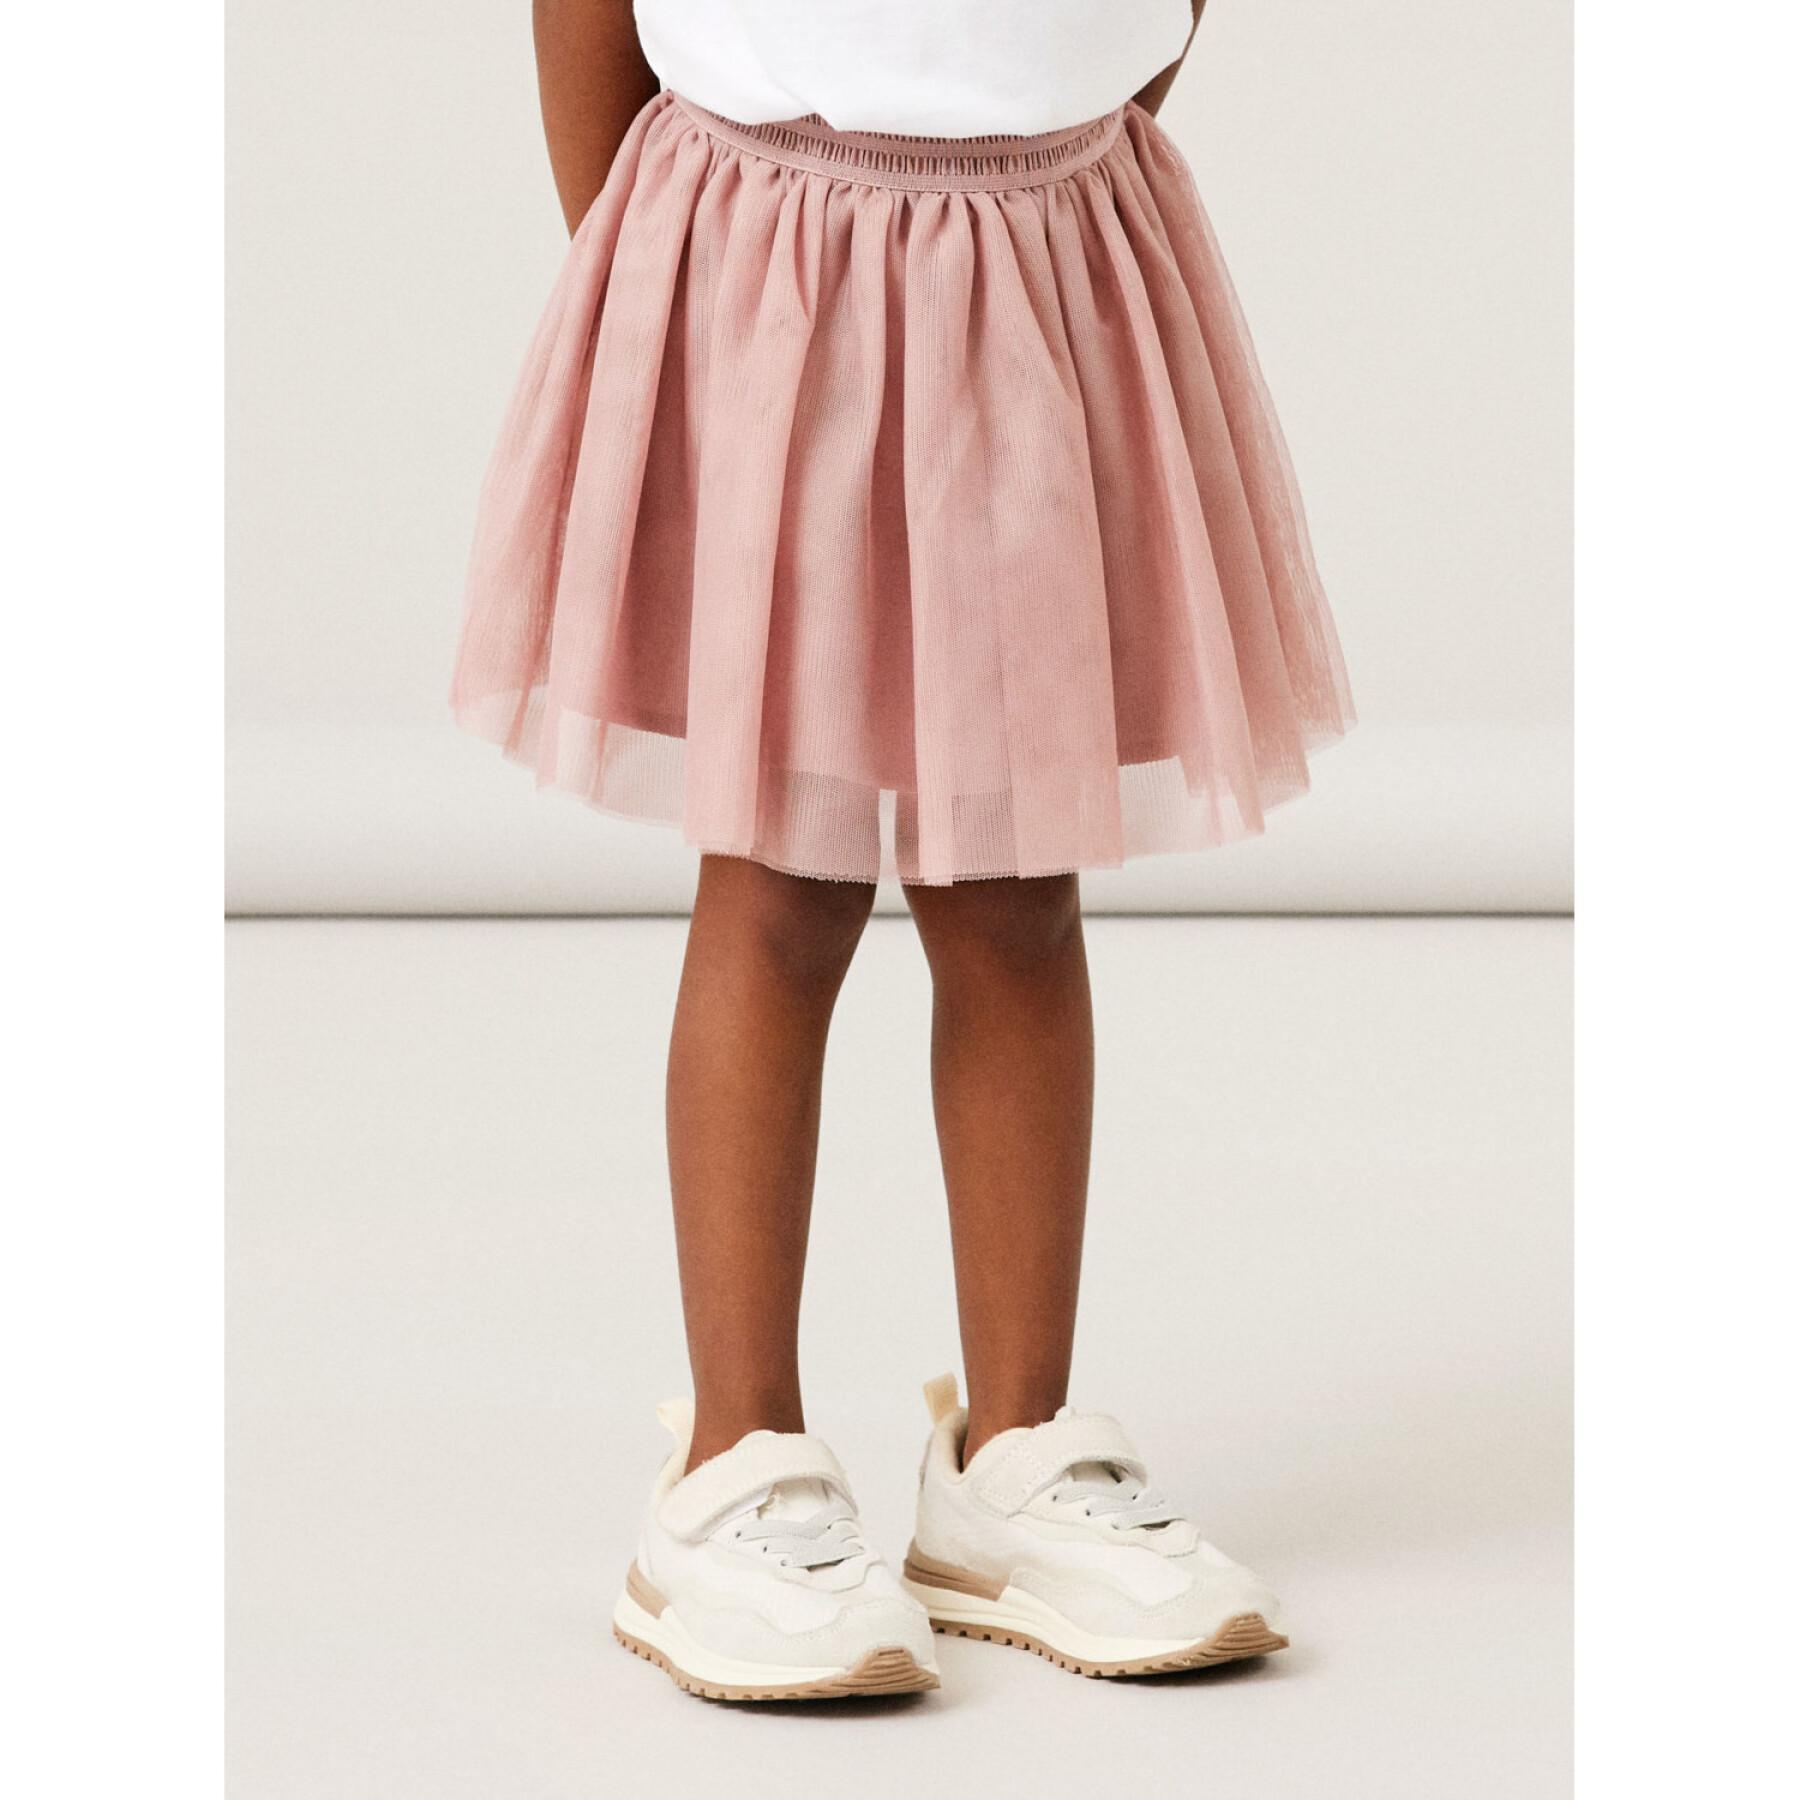 Mini skirt girl Name it Nutulle - Skirts & Shorts - Clothing - Kids